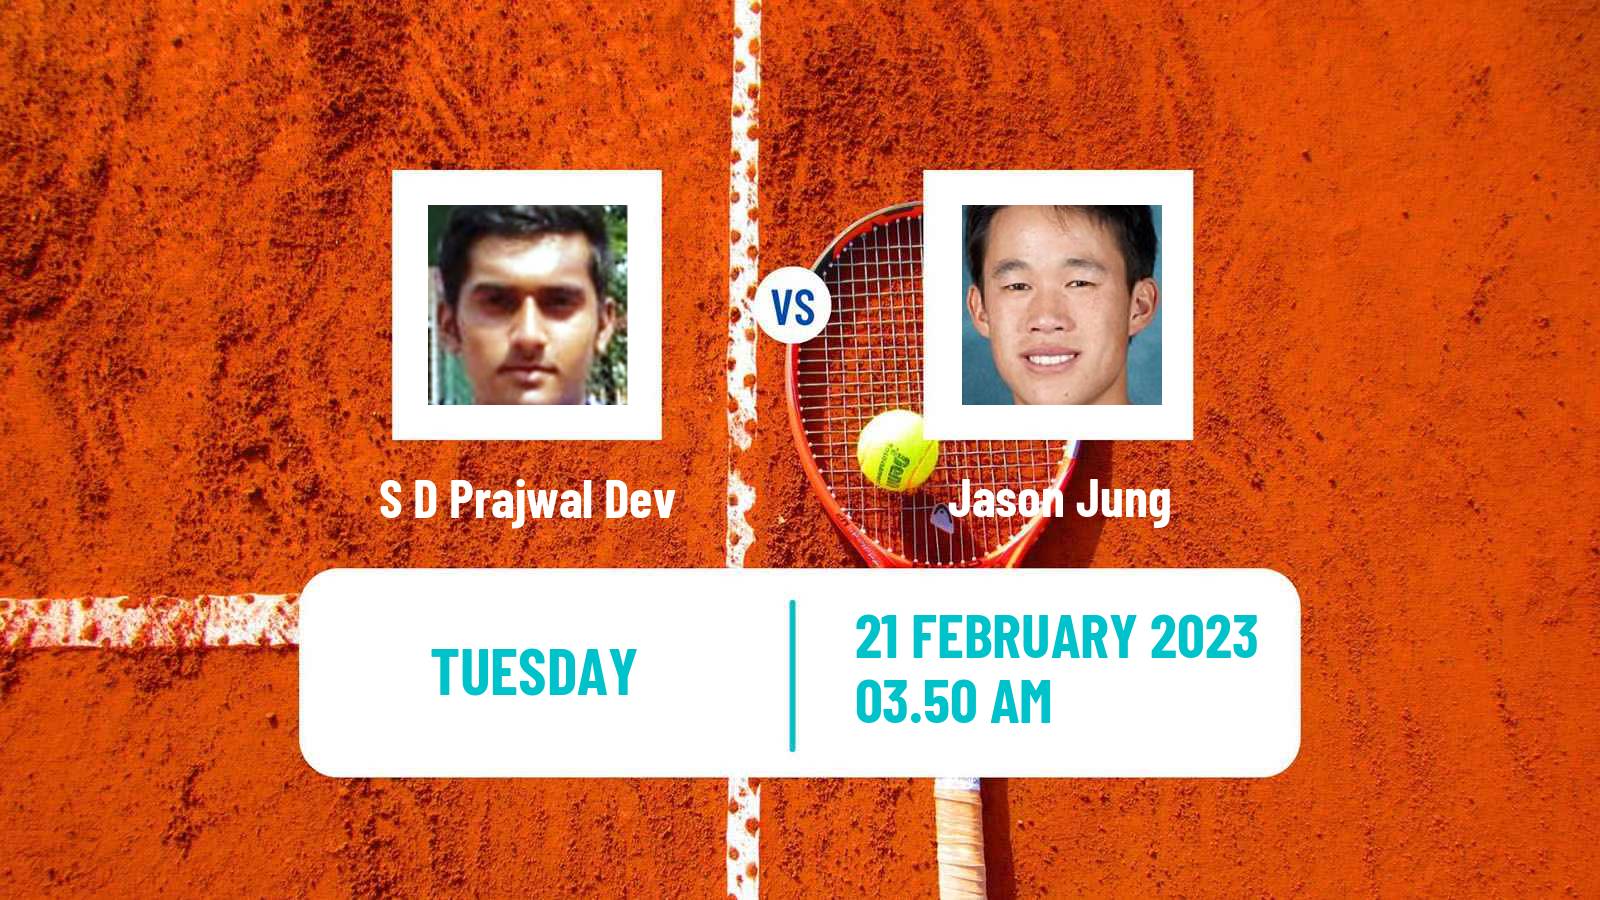 Tennis ATP Challenger S D Prajwal Dev - Jason Jung